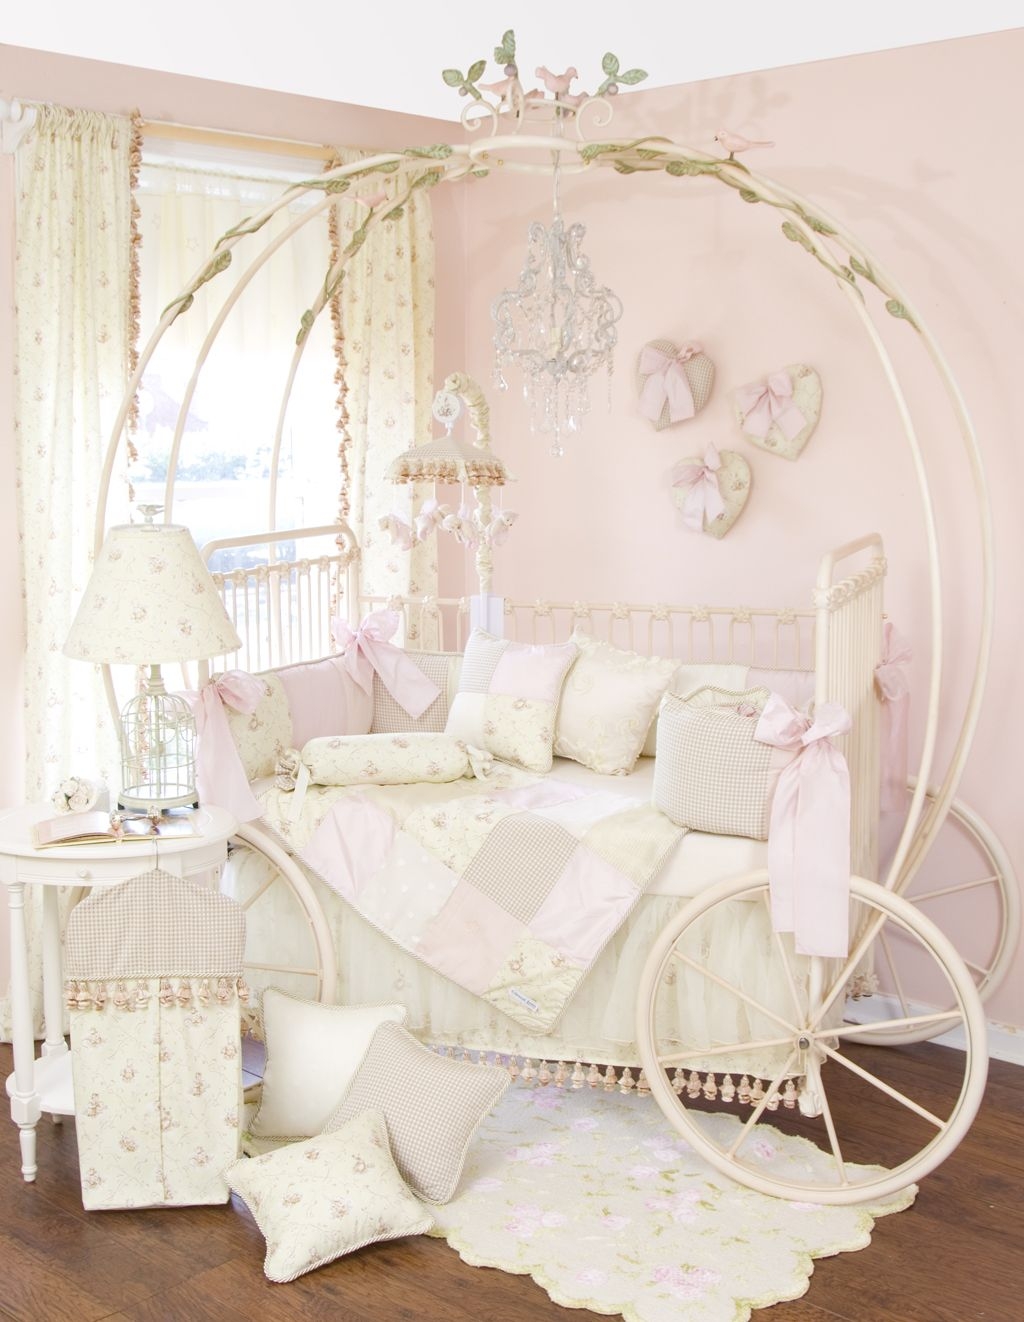 Canopy bedroom sets for girls